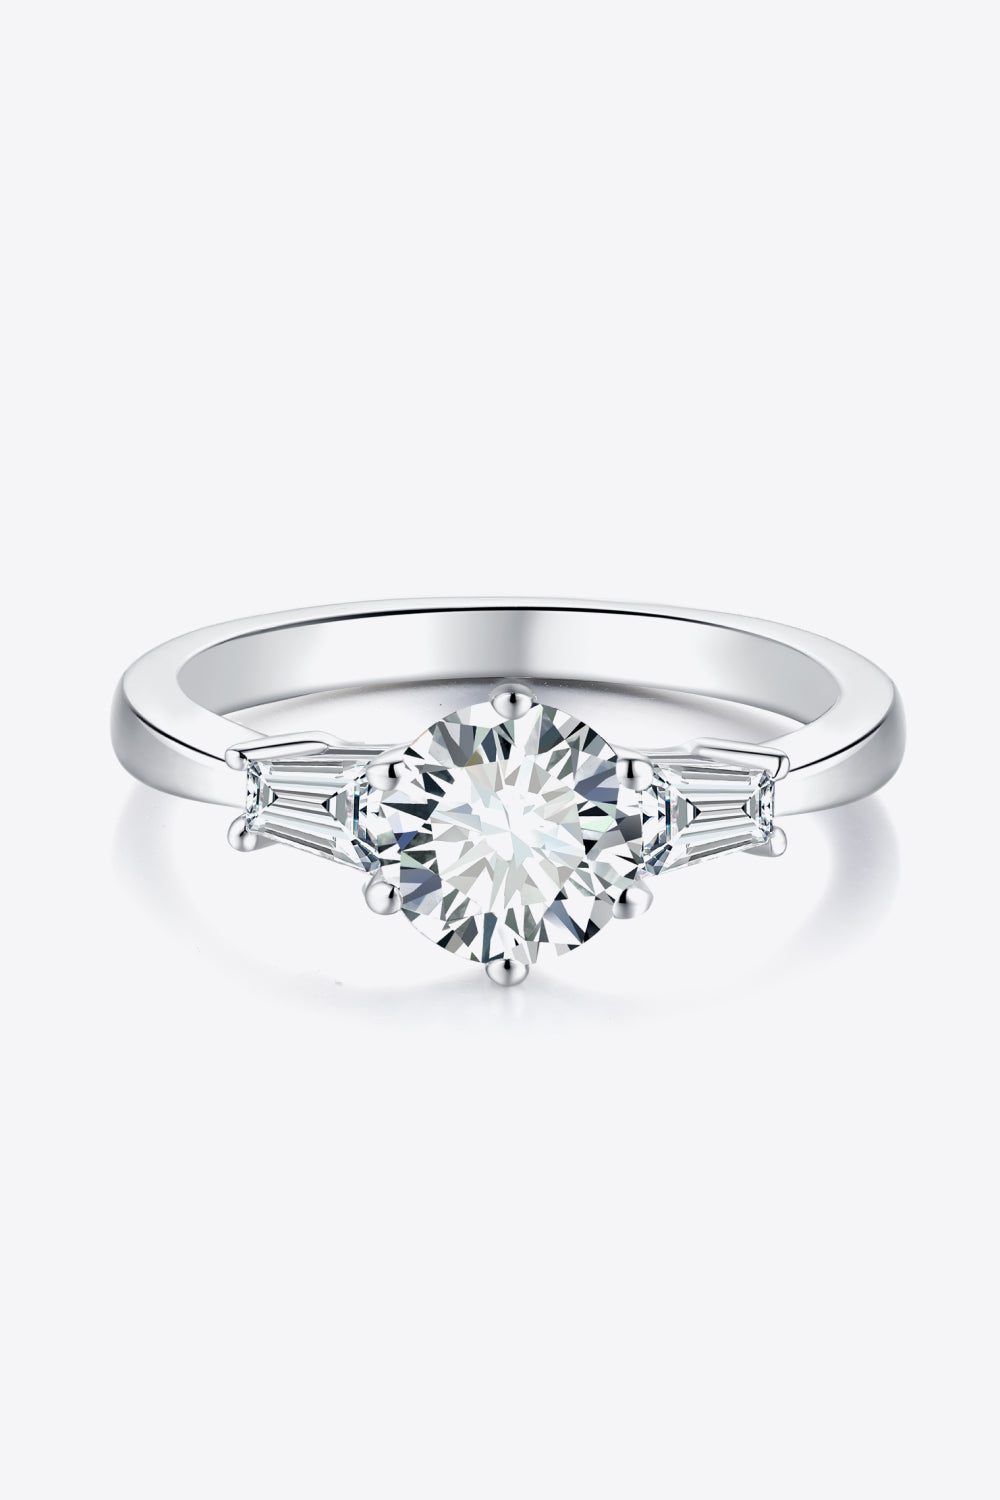 loyal-love-1-carat-moissanite-platinum-plated-ring